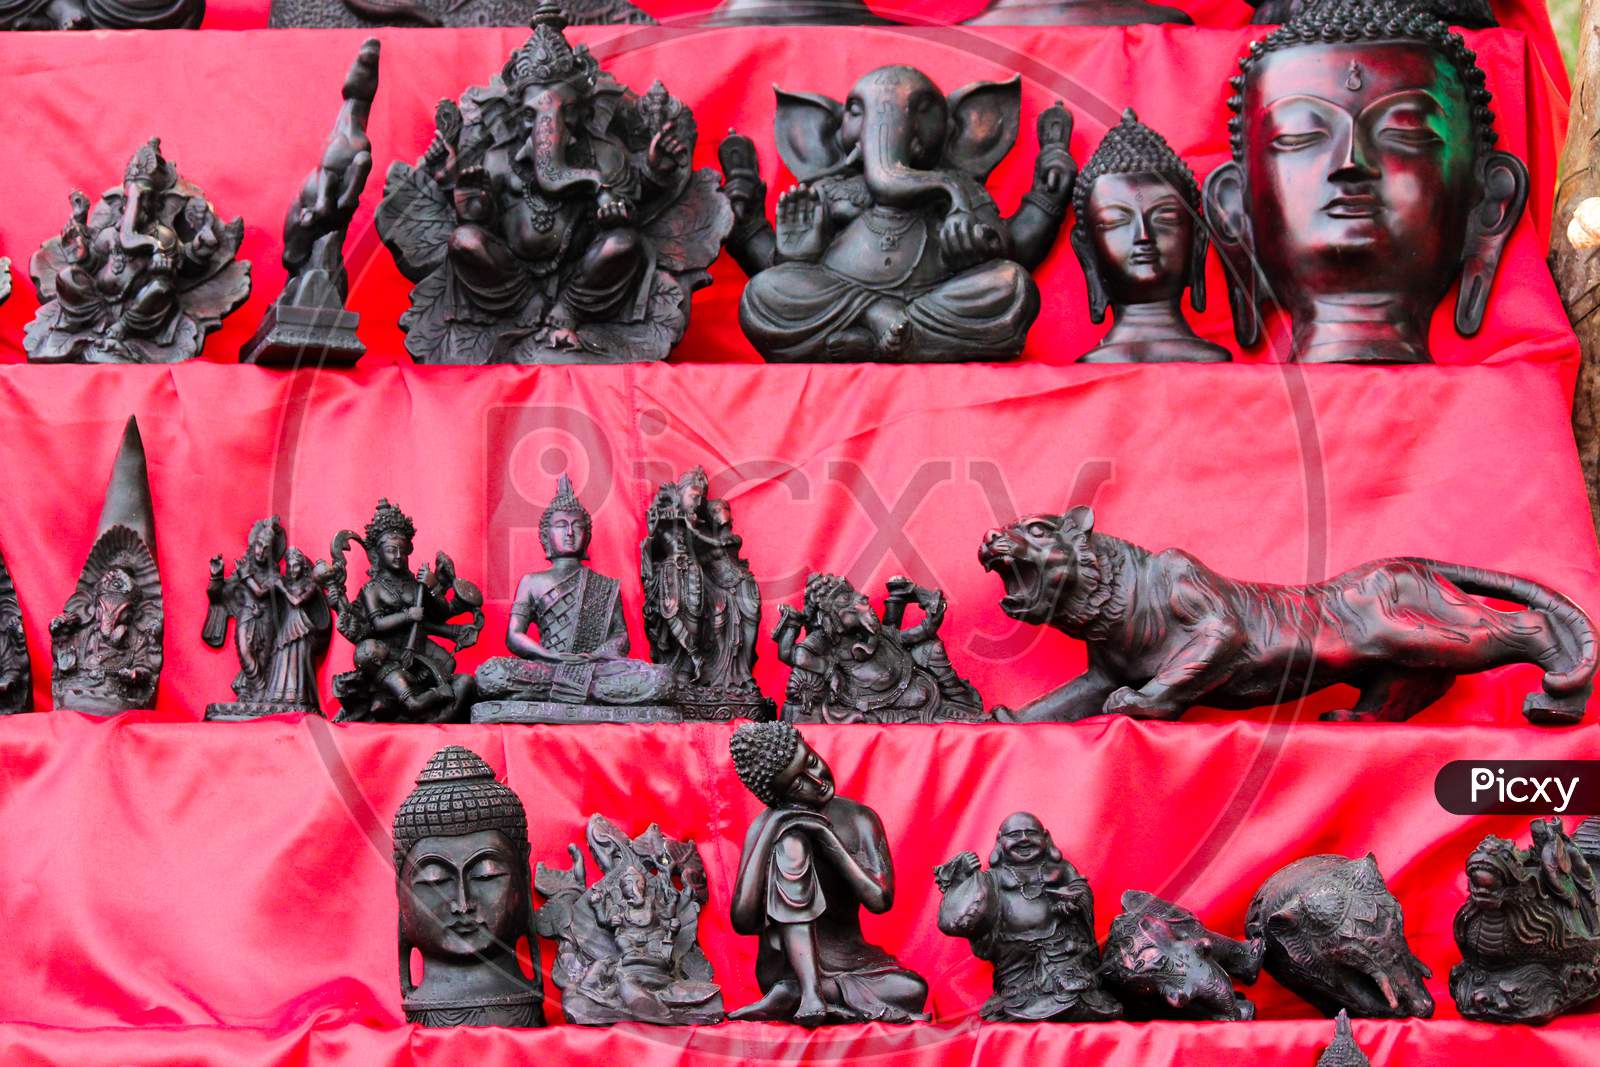 An antique shop showcasing Indian deities at Kerala tourism in India.